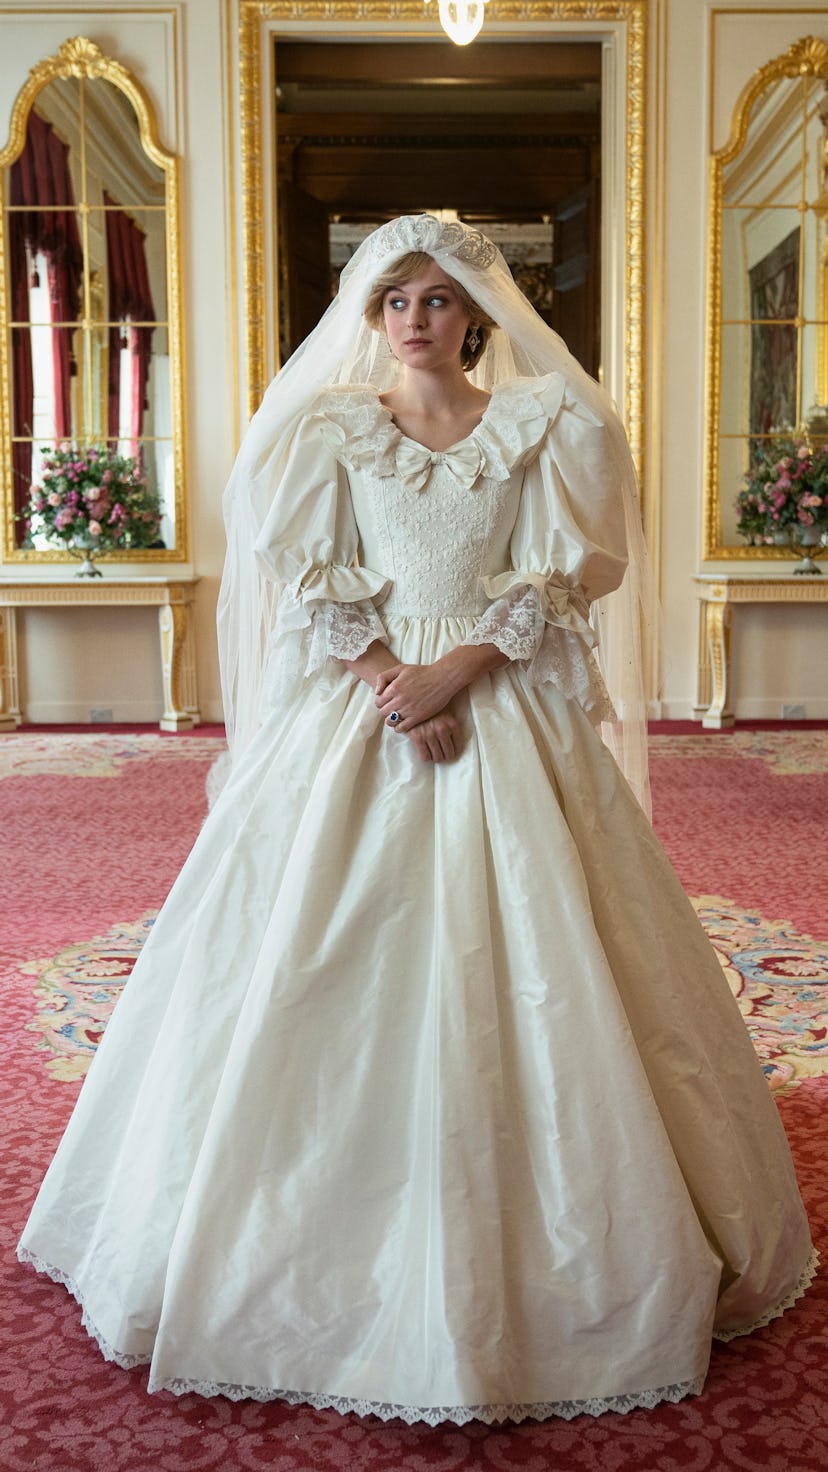 Emma Corrin as Princess Diana in 'The Crown' via the Netflix press site.